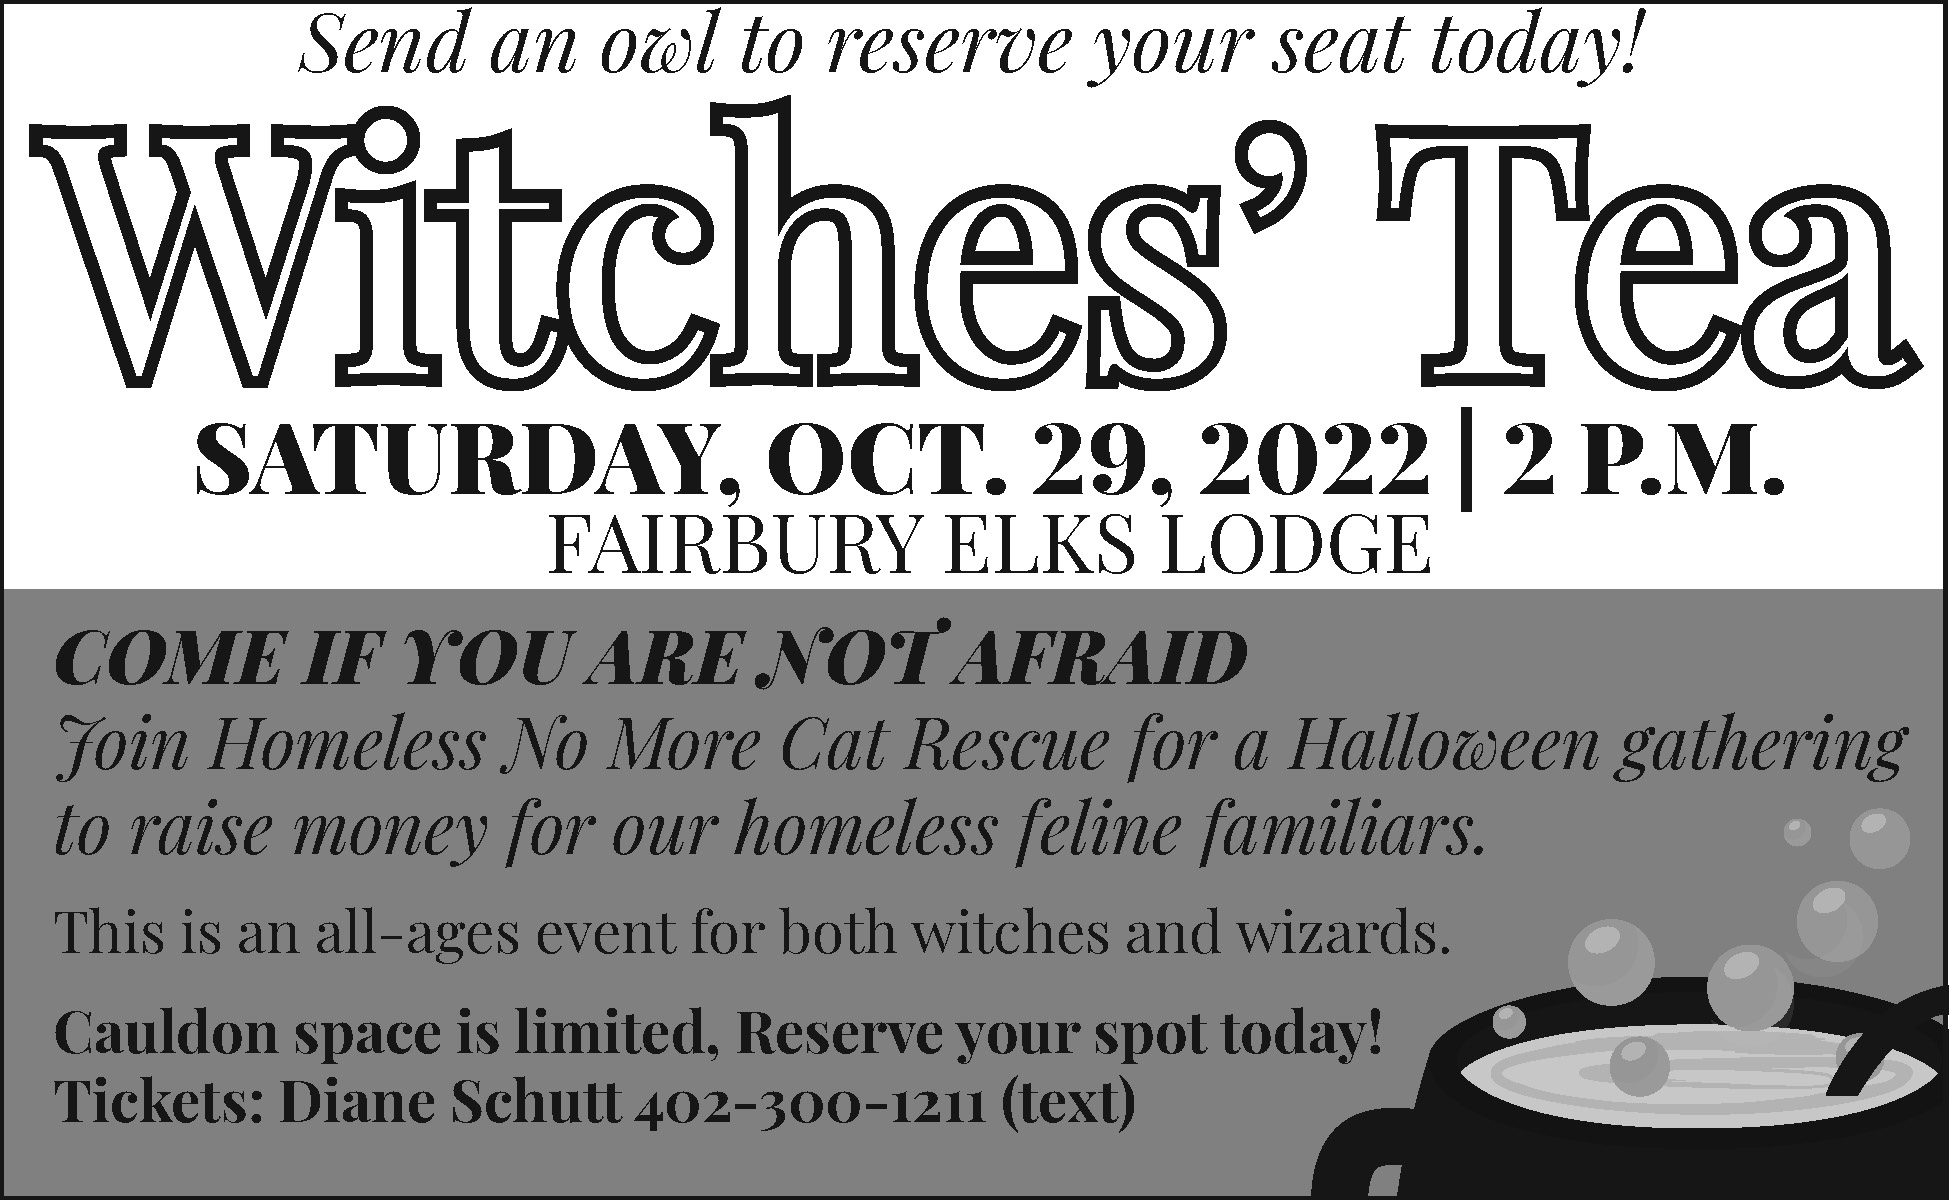 Witches Tea fundraiser, Fairbury, Nebraska